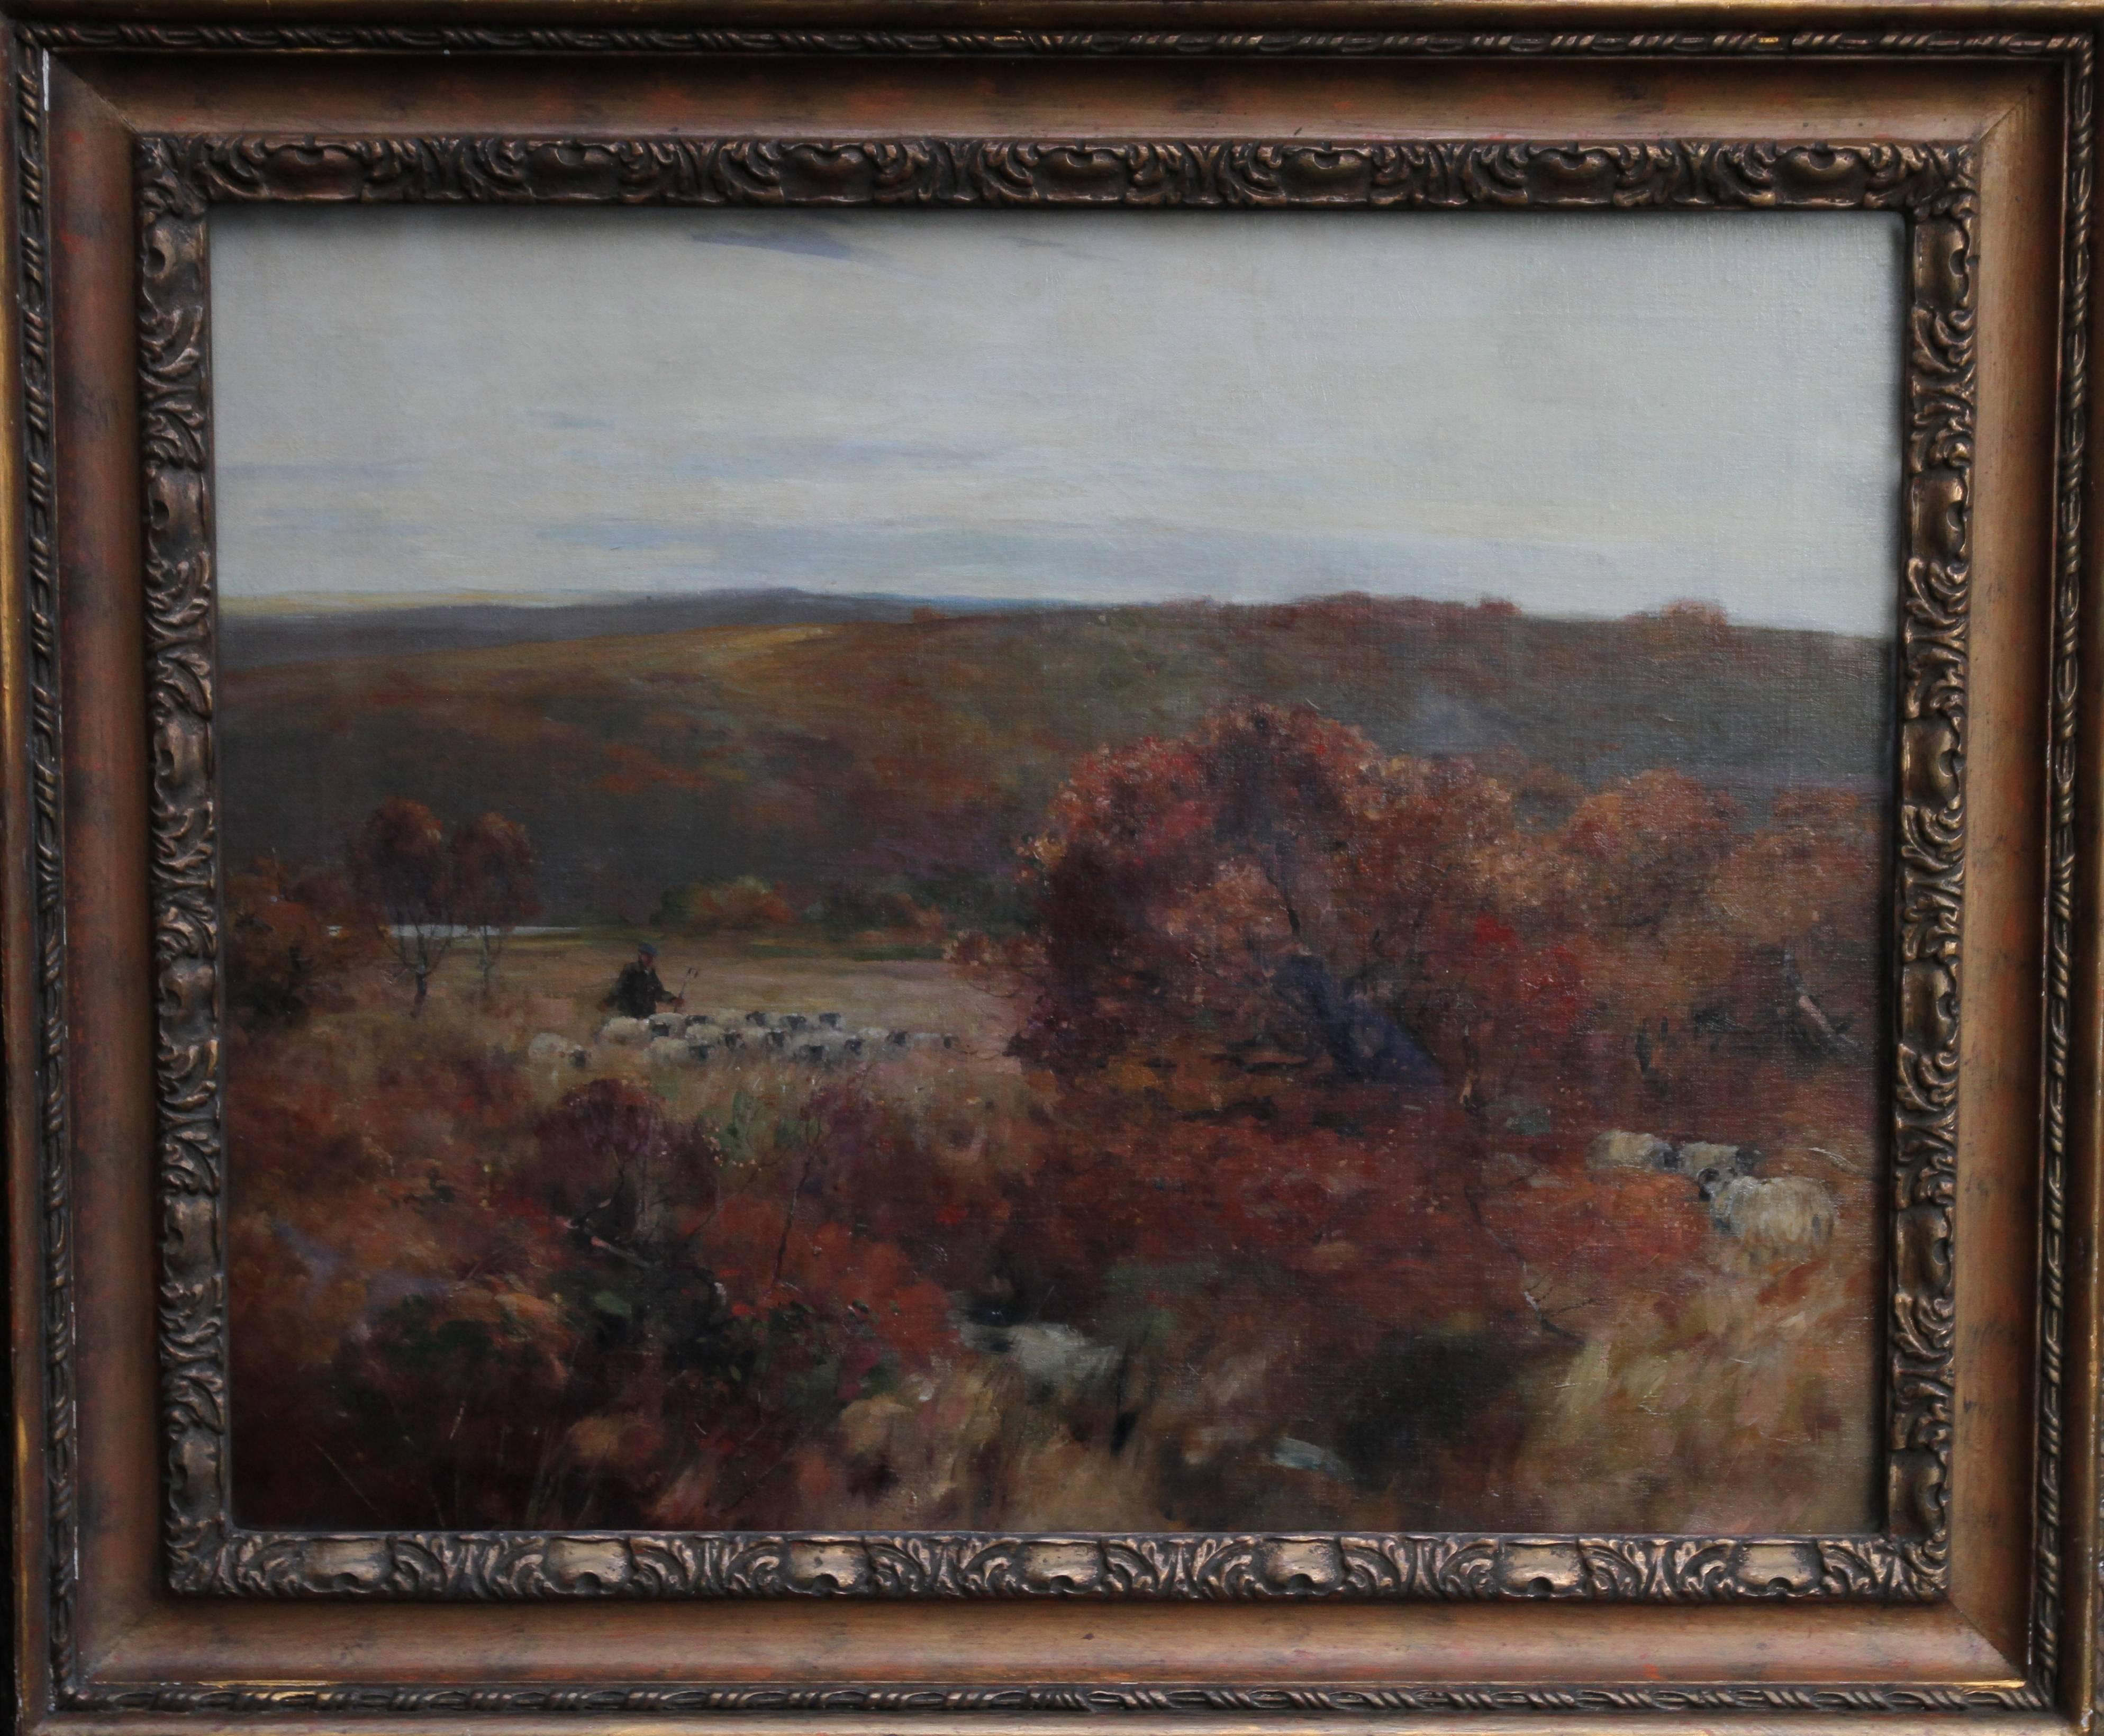 David Fulton Landscape Painting – Pastoral Landscape – schottische Kunst, impressionistisches Landschaftsgemälde, 1900 